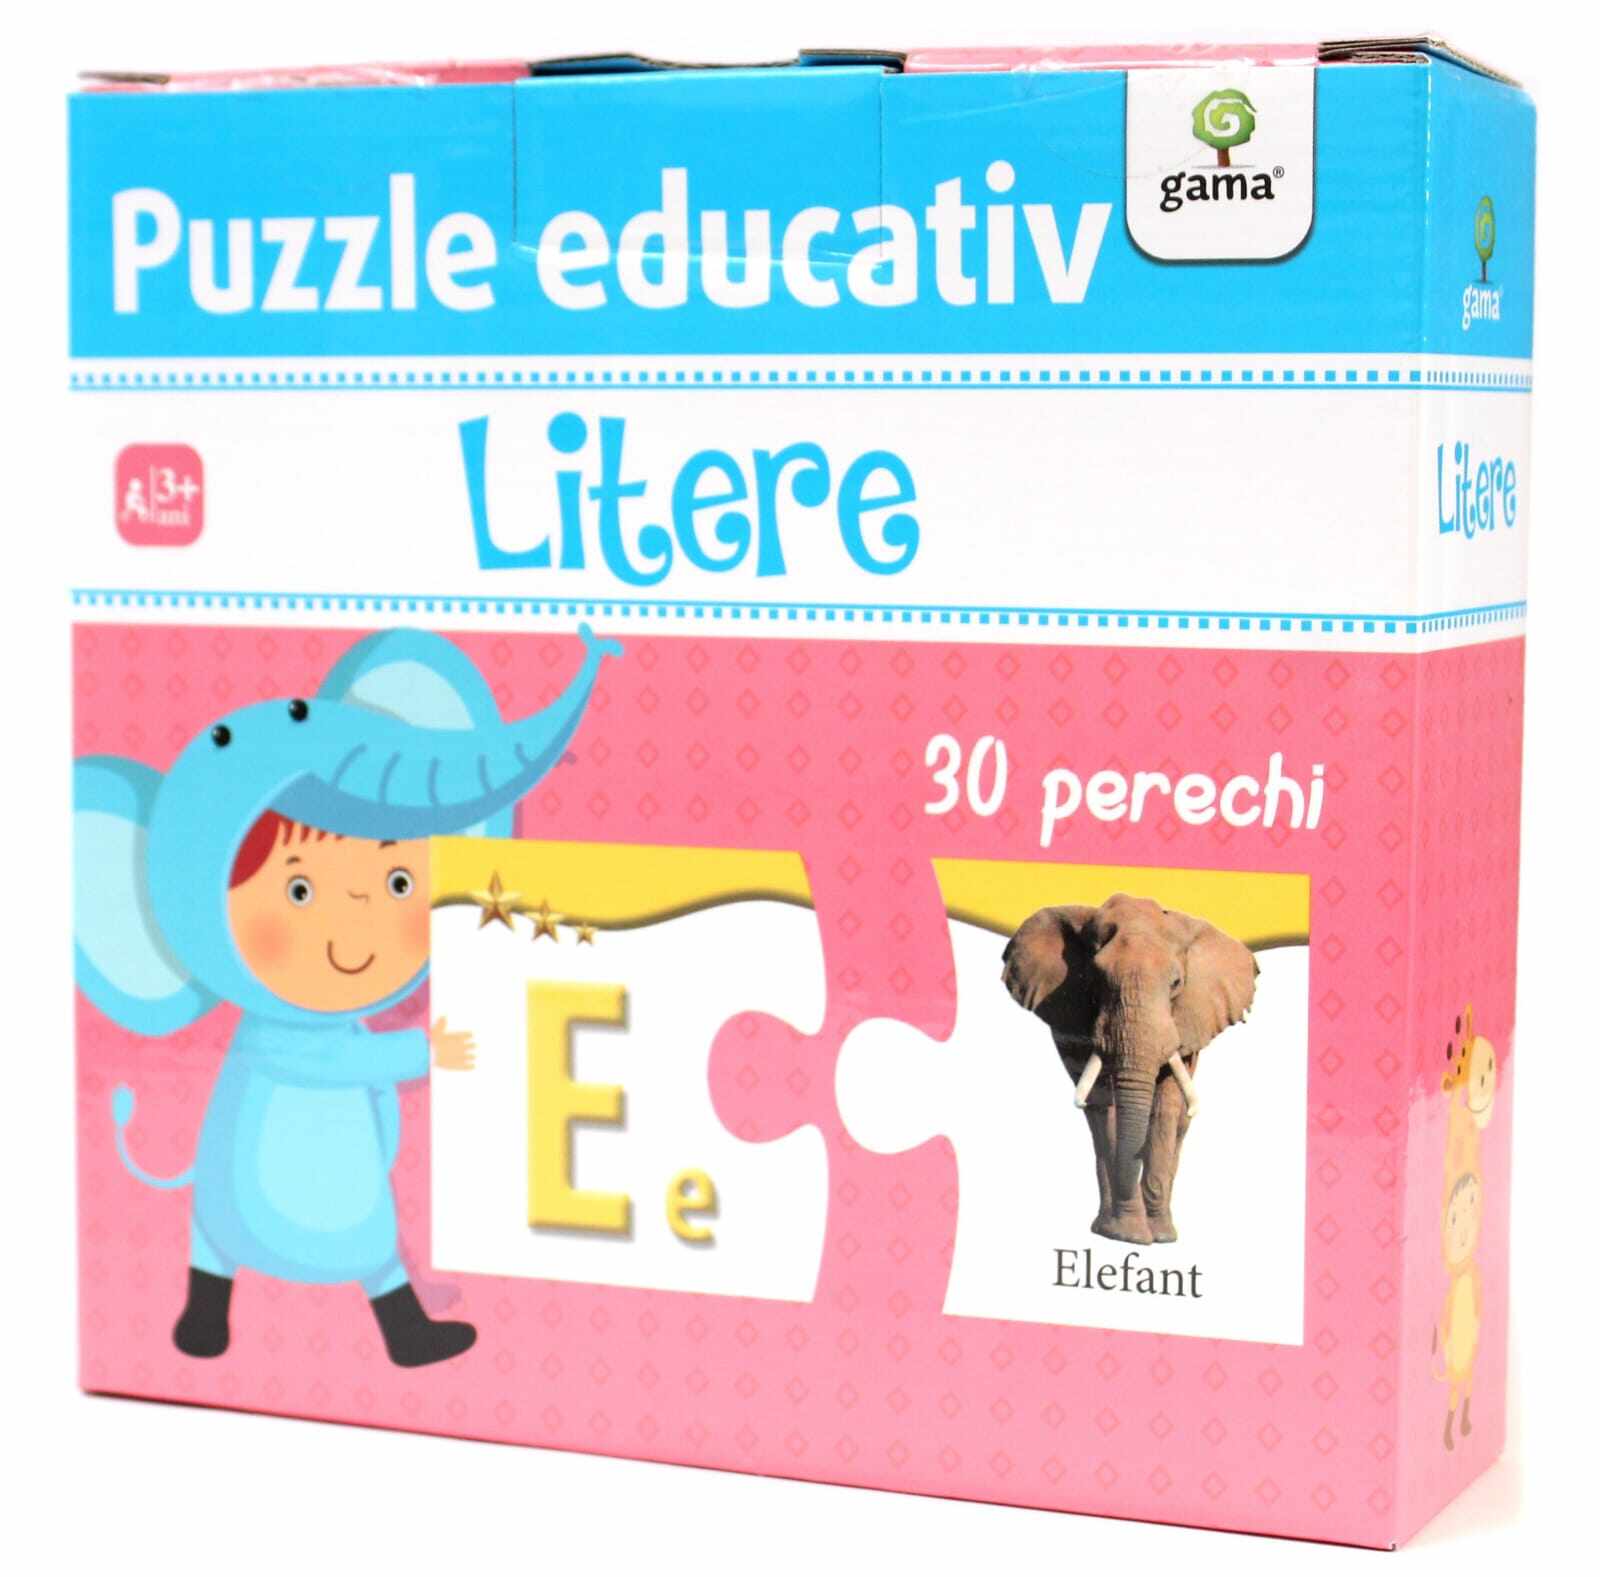 Puzzle Educativ, Litere, Editura Gama, +3 ani